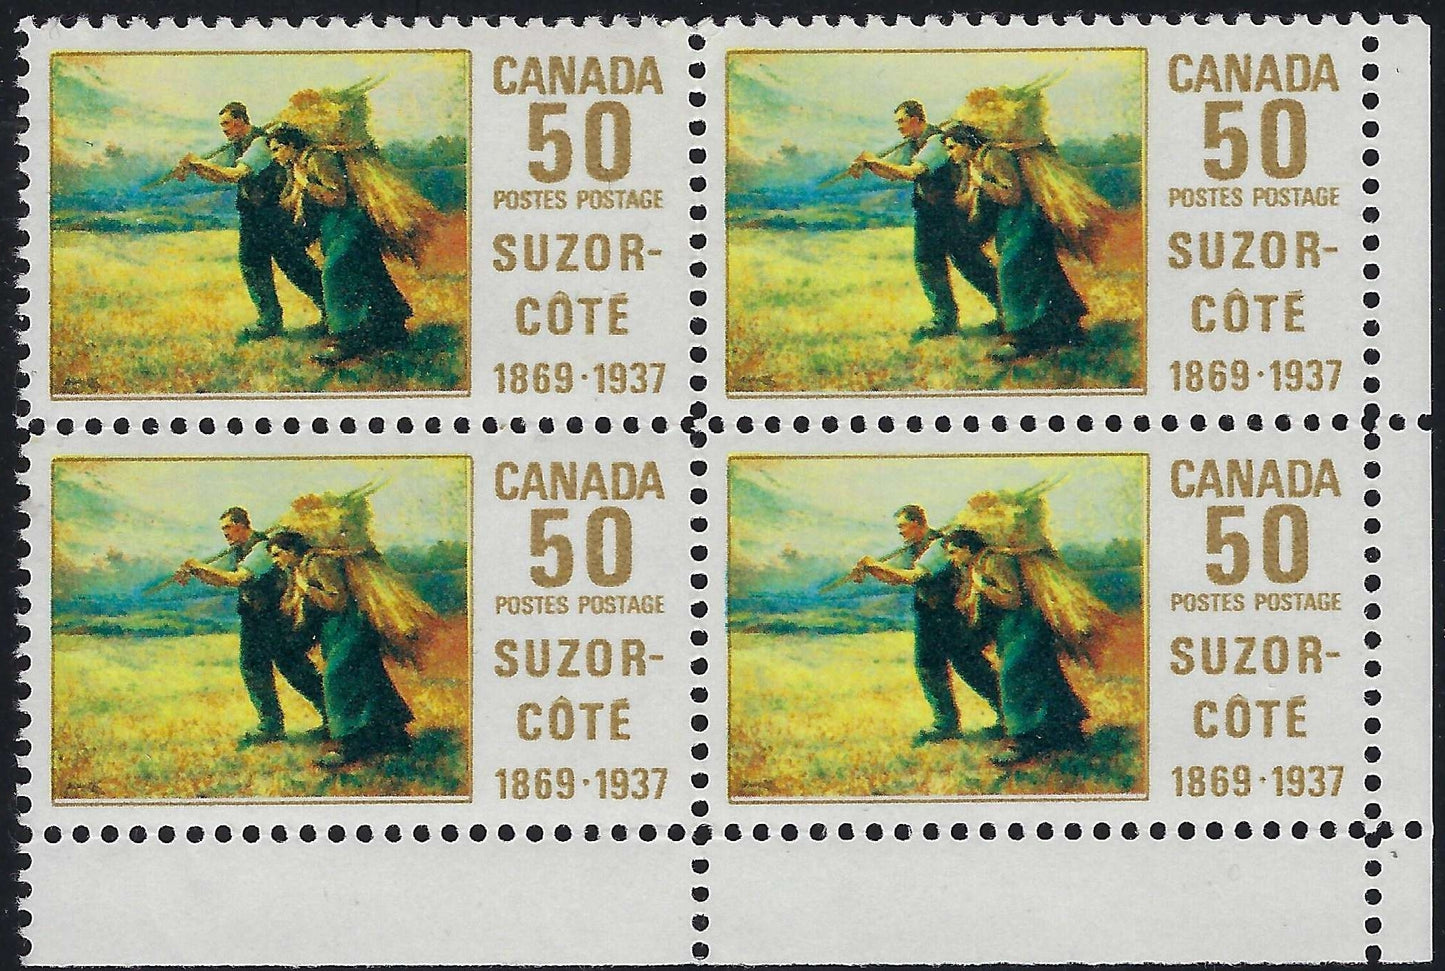 Canada 492 - 50¢ Suzor-Cote LR Corner Block of 4, VF-NH